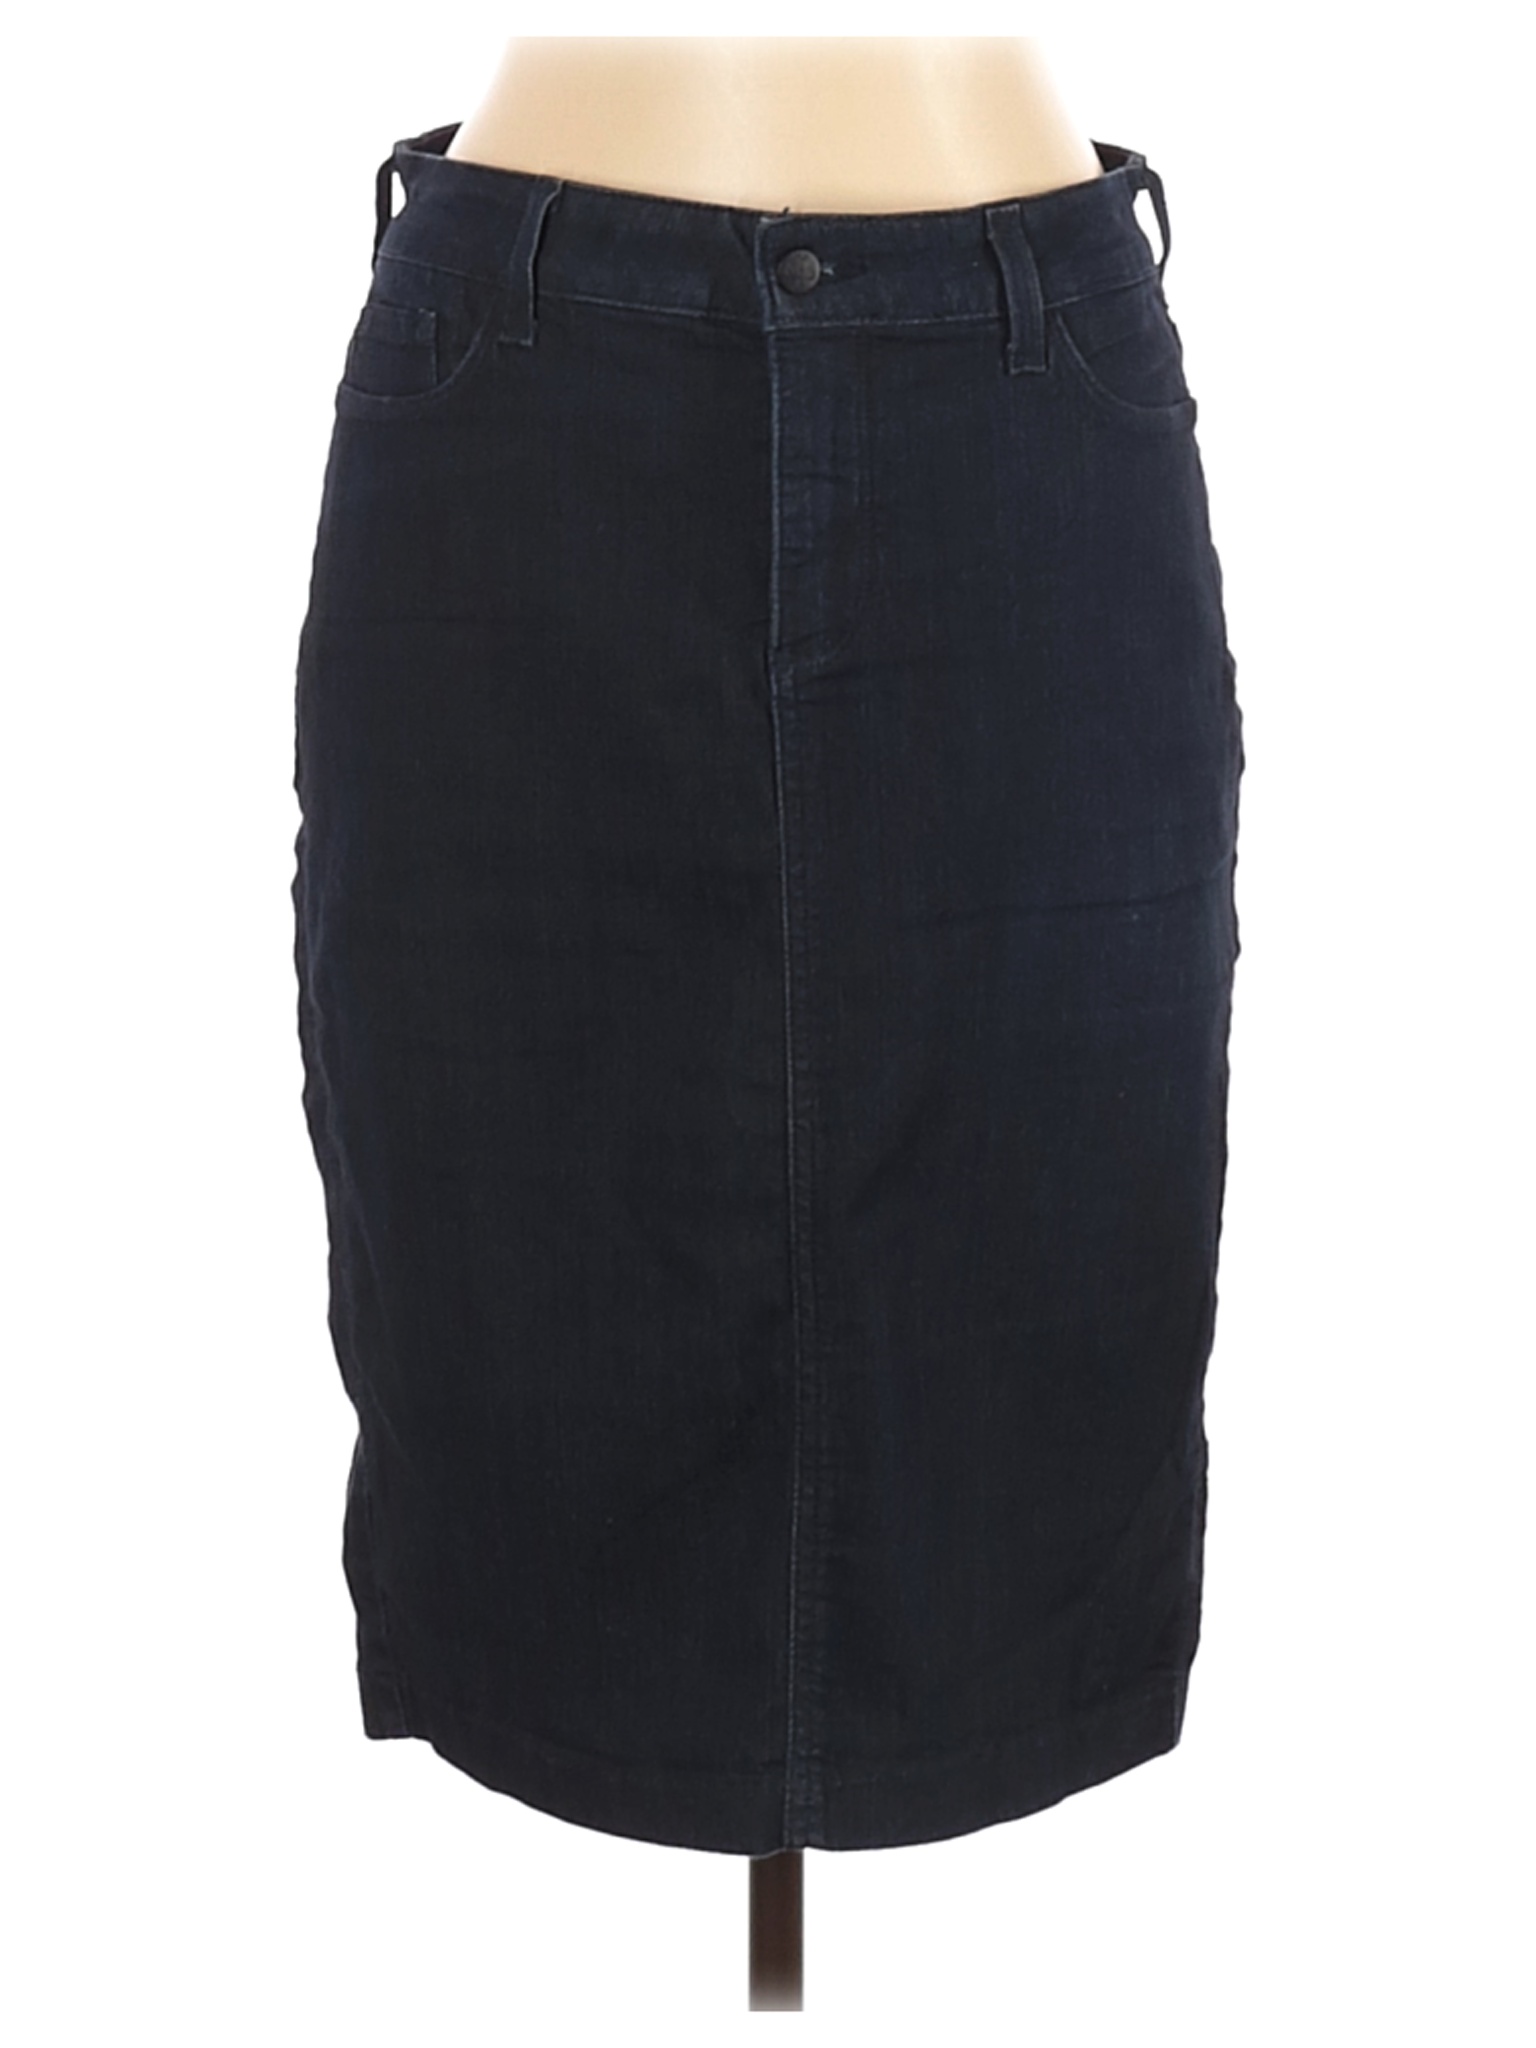 NYDJ Women Black Denim Skirt 10 | eBay